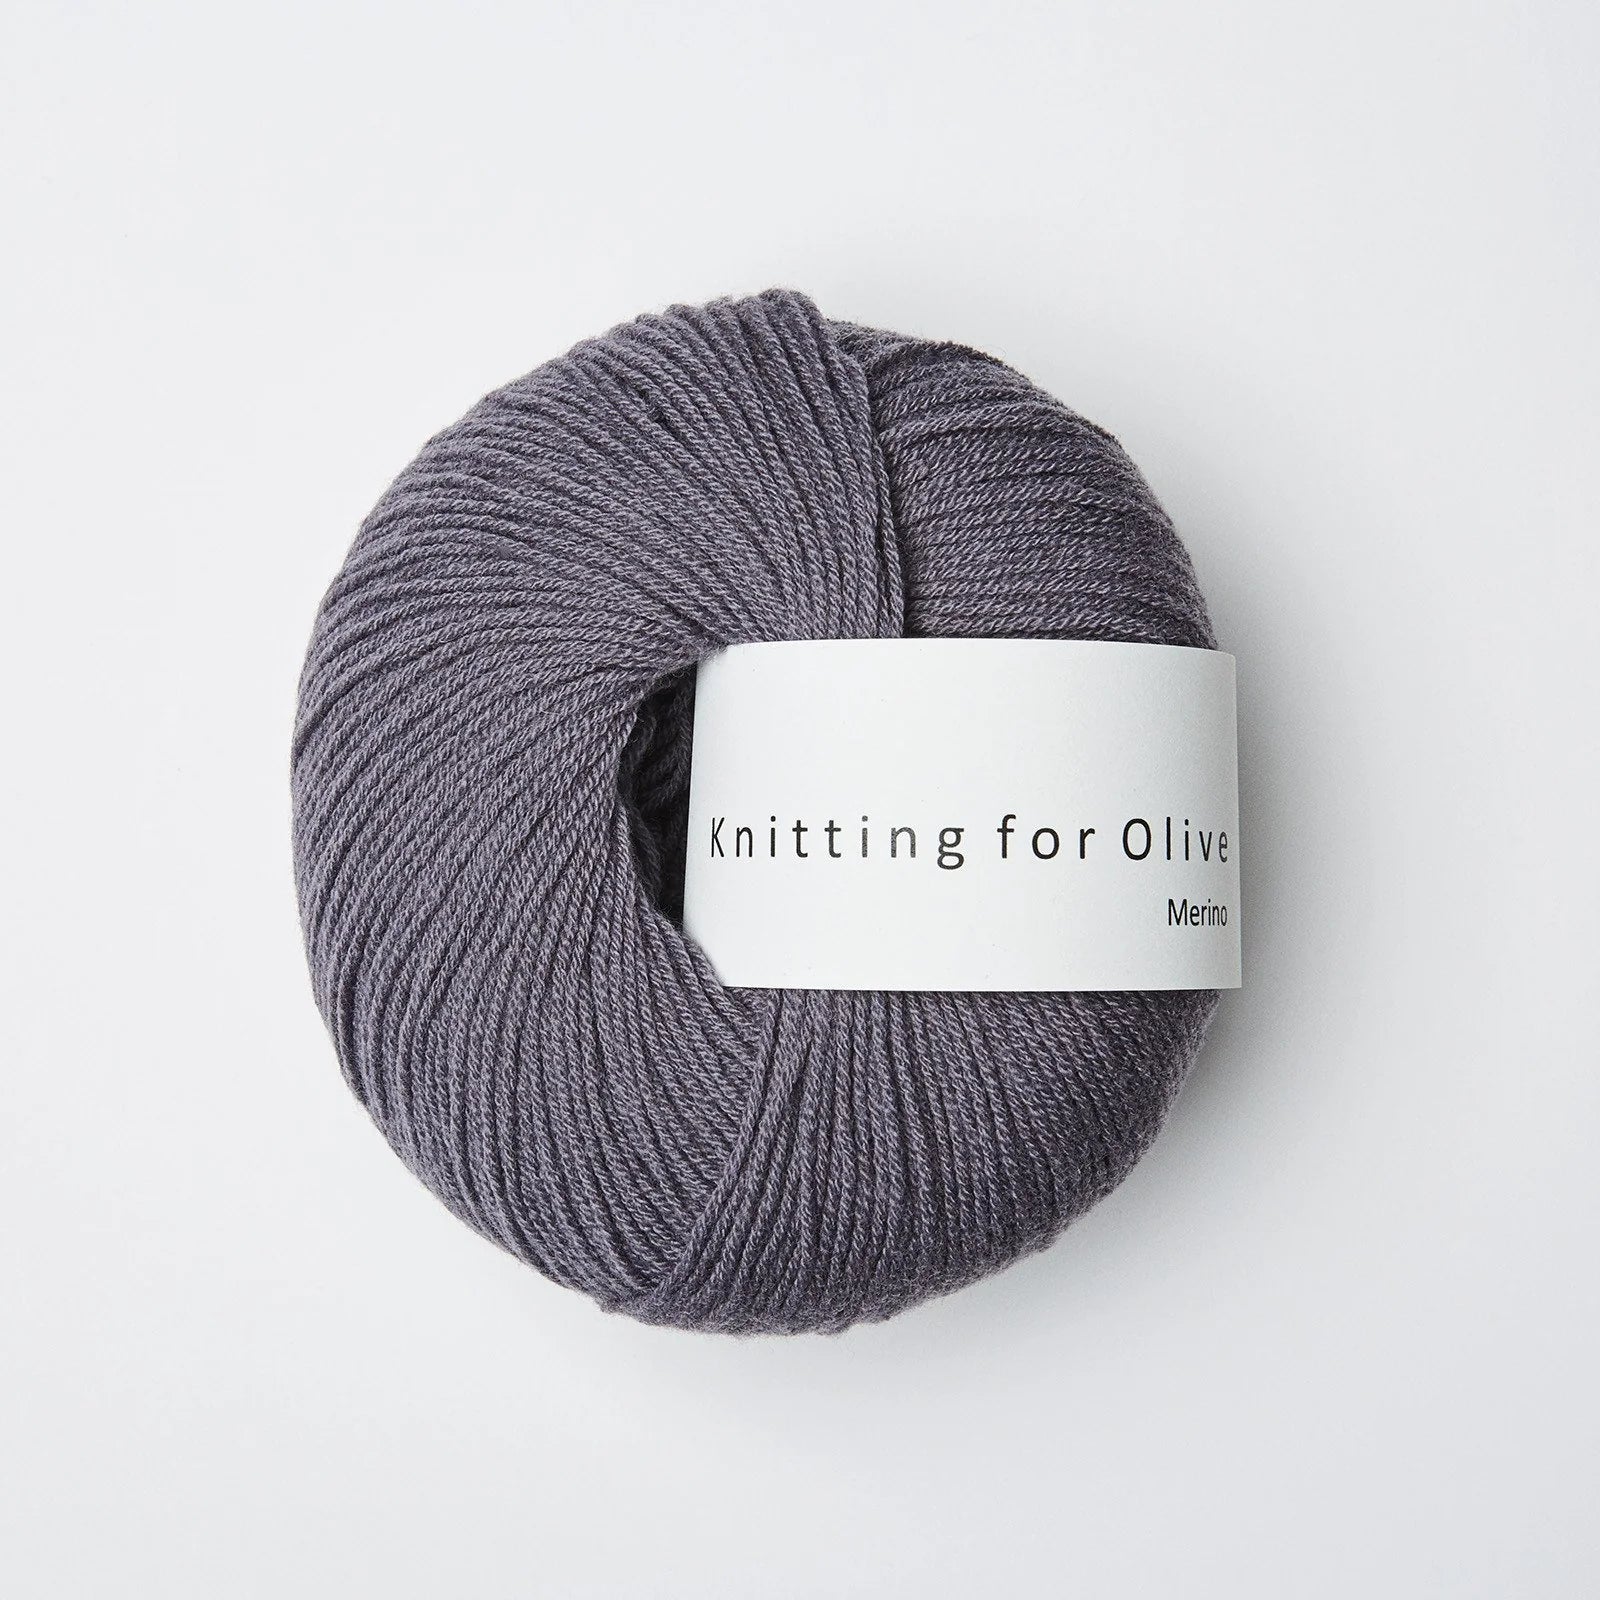 Knitting for Olive Merino - Knitting for Olive - Dusty Violette - The Little Yarn Store